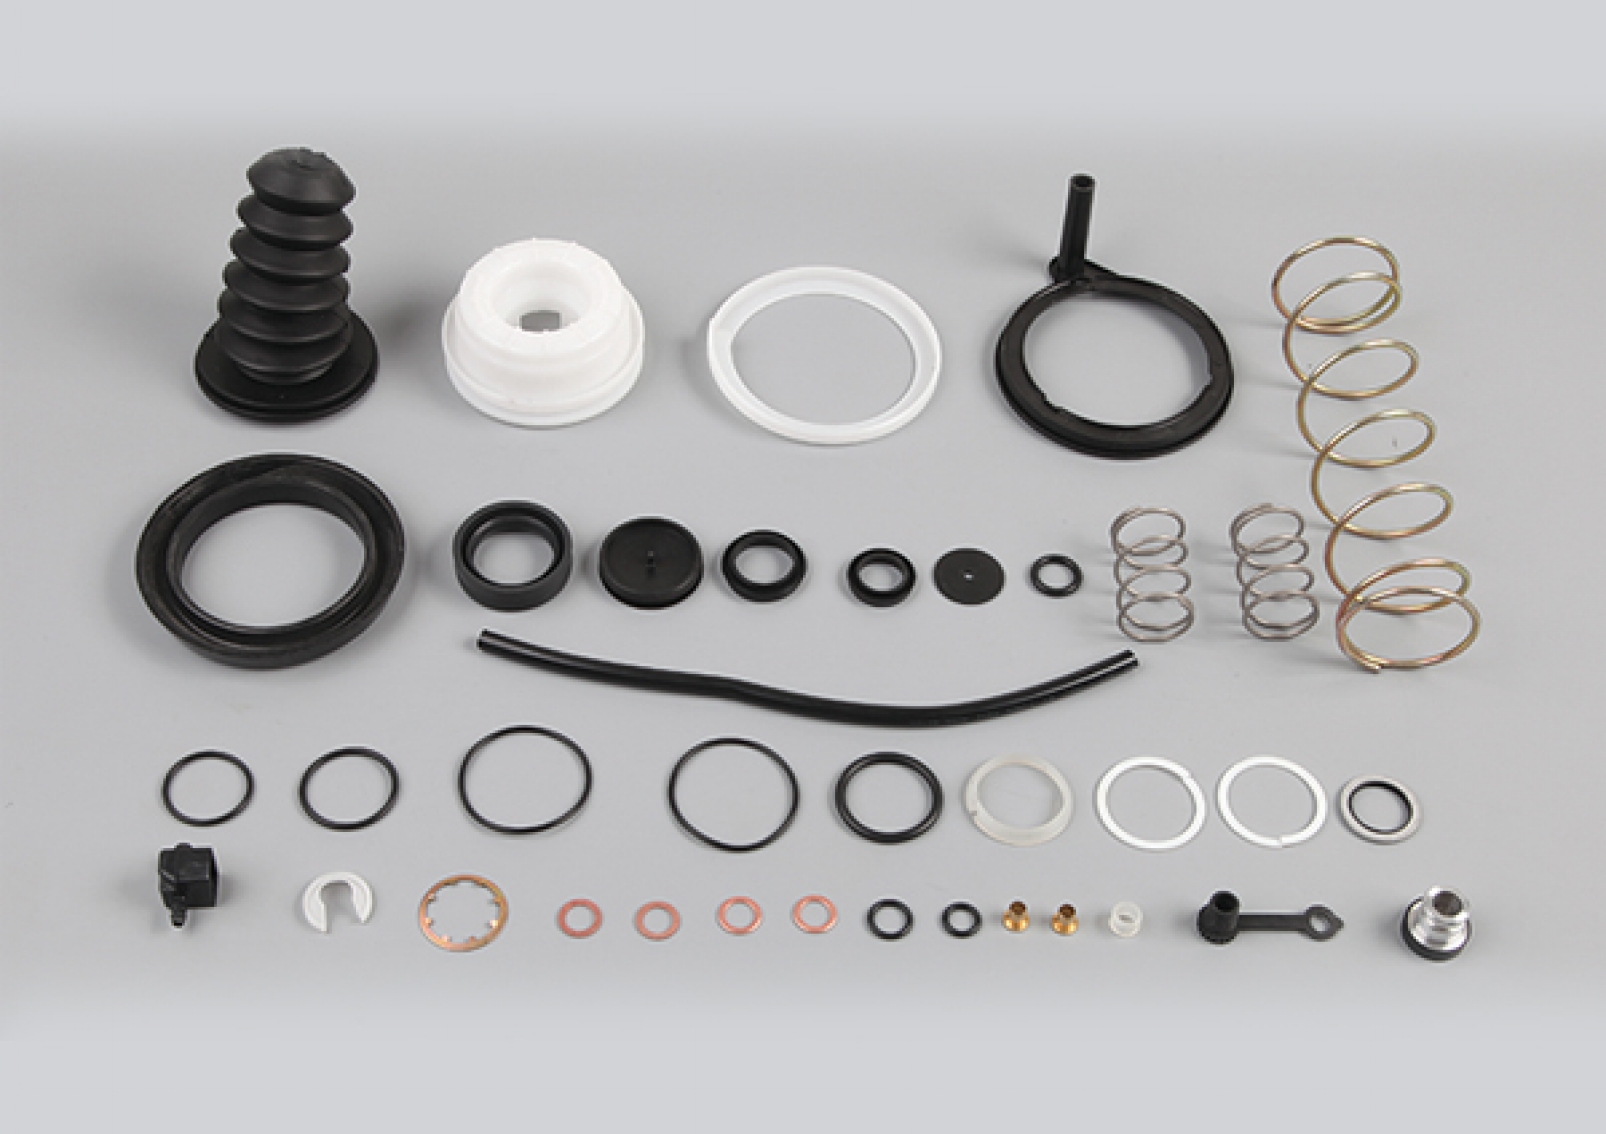 Clutch Servo Repair Kit for Mercedes Benz, Man, Daf, 970 051 910 2, 066873, 000 290 06 47